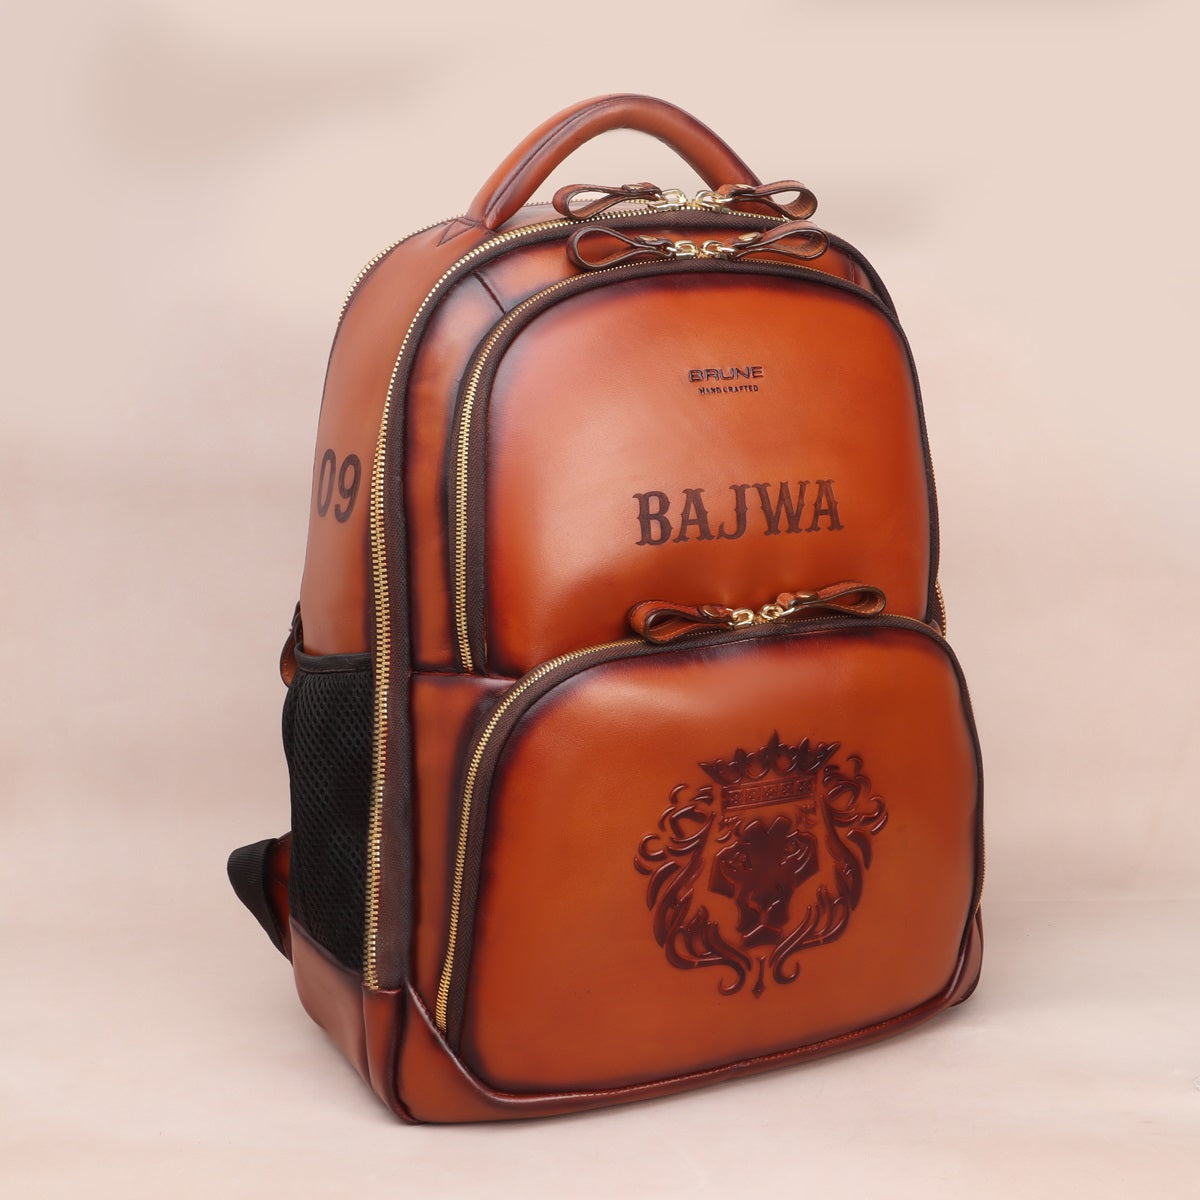 Customised Name Initials "BAJWA" & "09" Tan Leather Hand Painted Backpack  by Brune & Bareskin